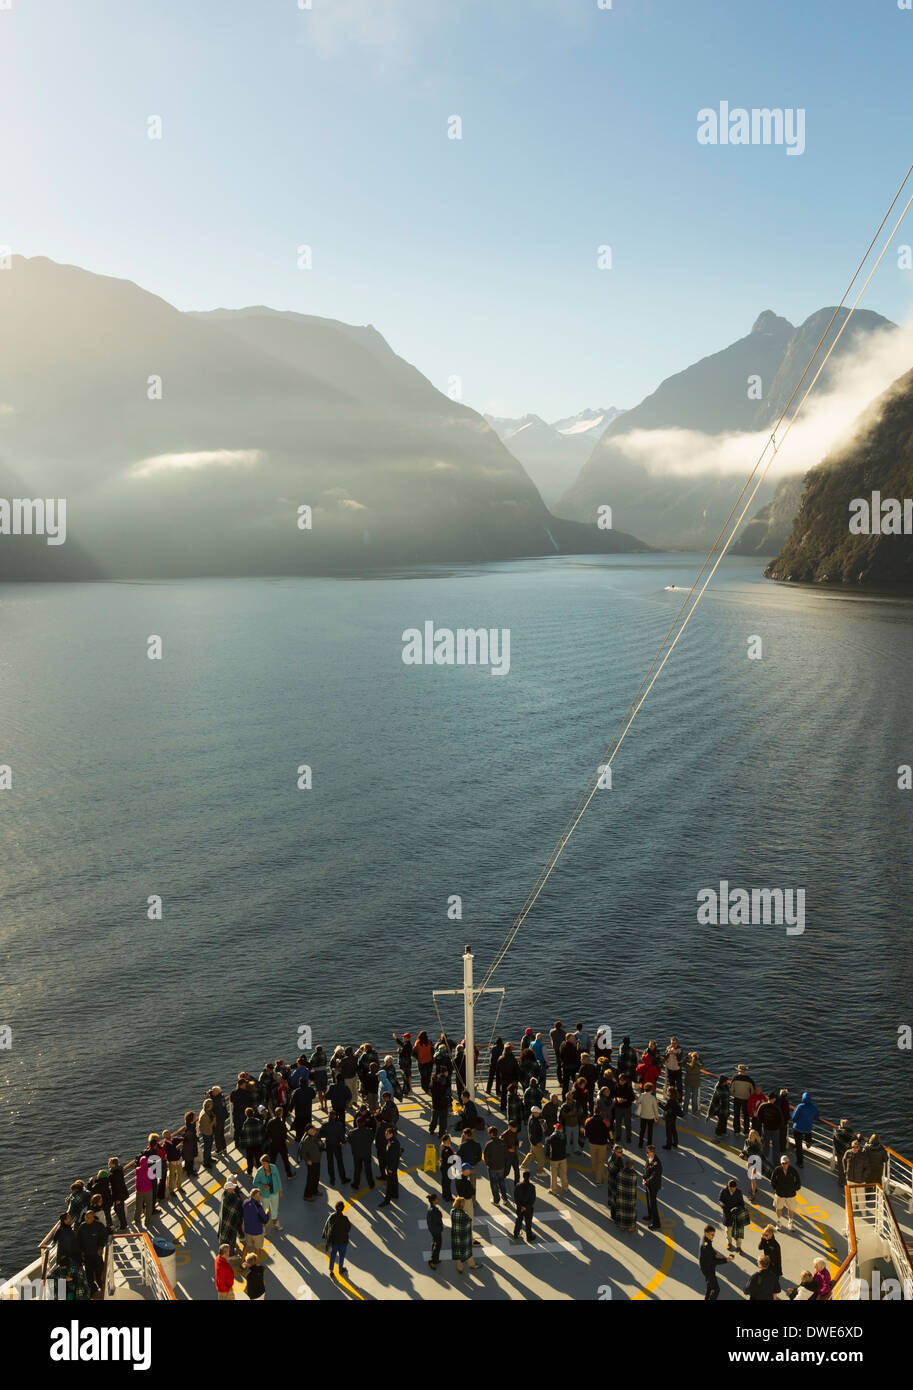 Fiordland National Park, New Zealand - Cruise ship sailing into Milford Sound, South Island, New Zealand Stock Photo